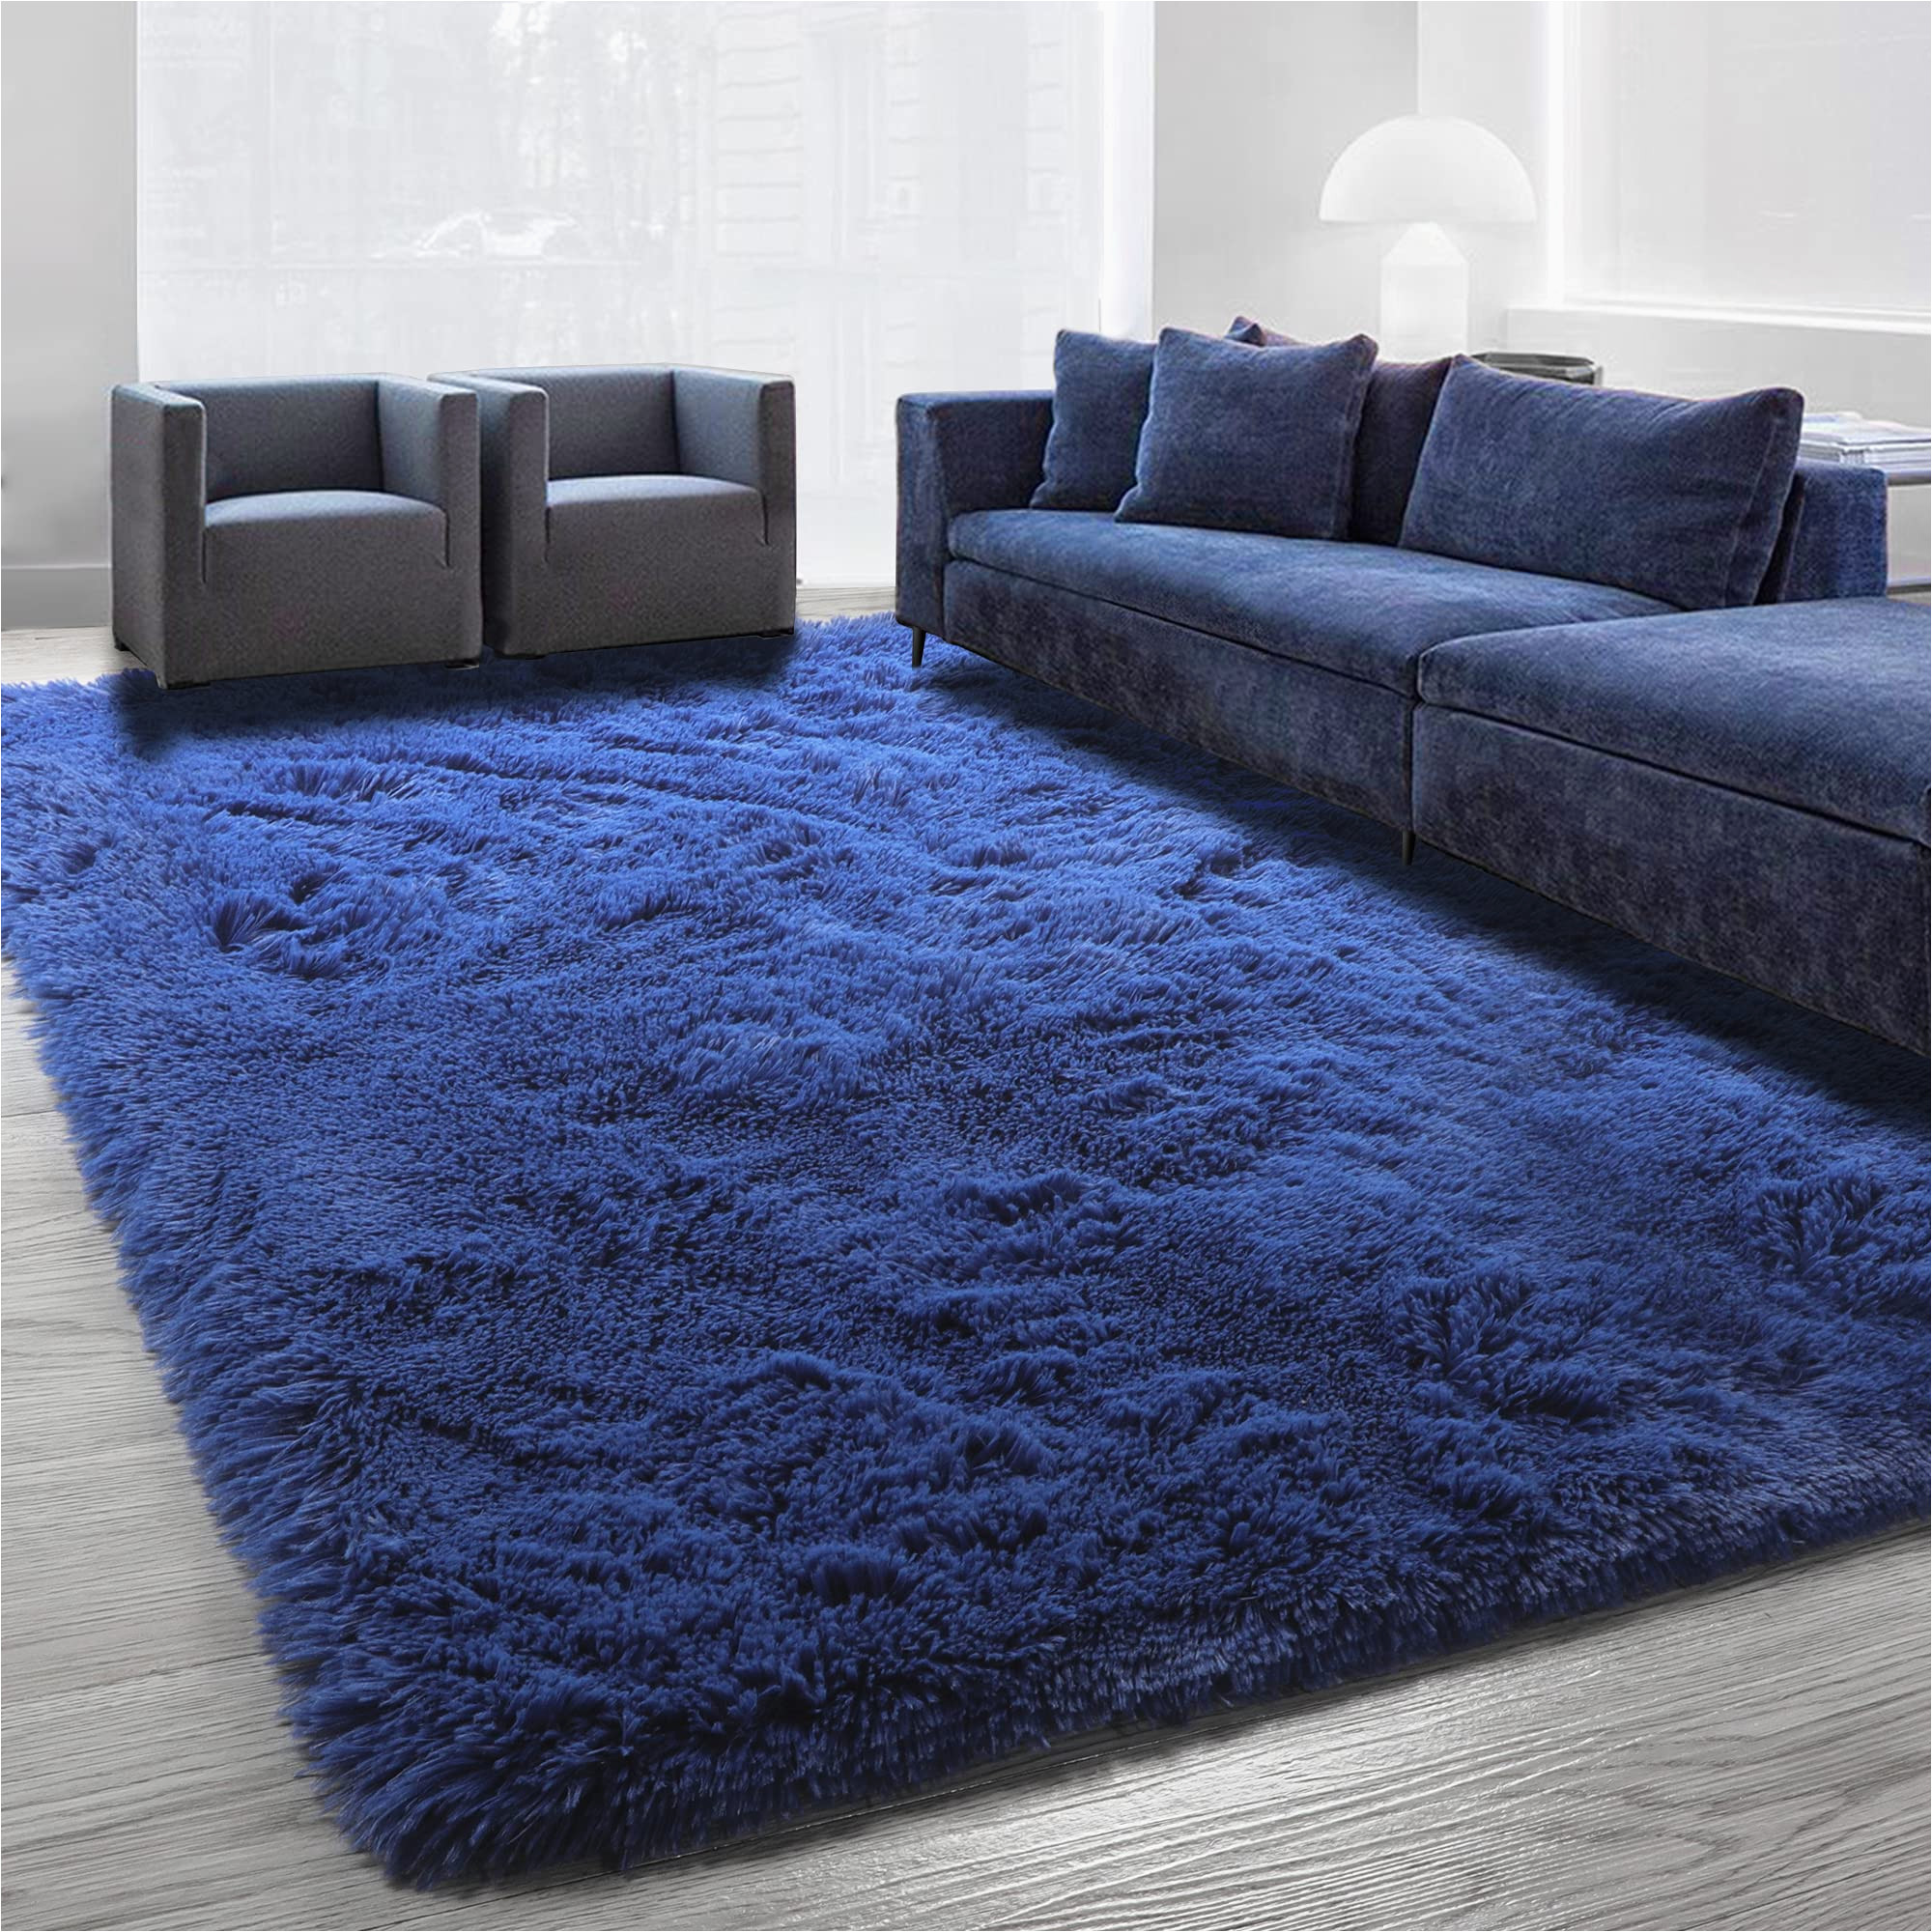 Royal Blue Fuzzy Rug Navy Blue area Rug for Bedroom,4’x6′,fluffy Shag Rug for Living Room,furry Carpet for Kids Room,shaggy Throw Rug for Nursery Room,fuzzy Plush …